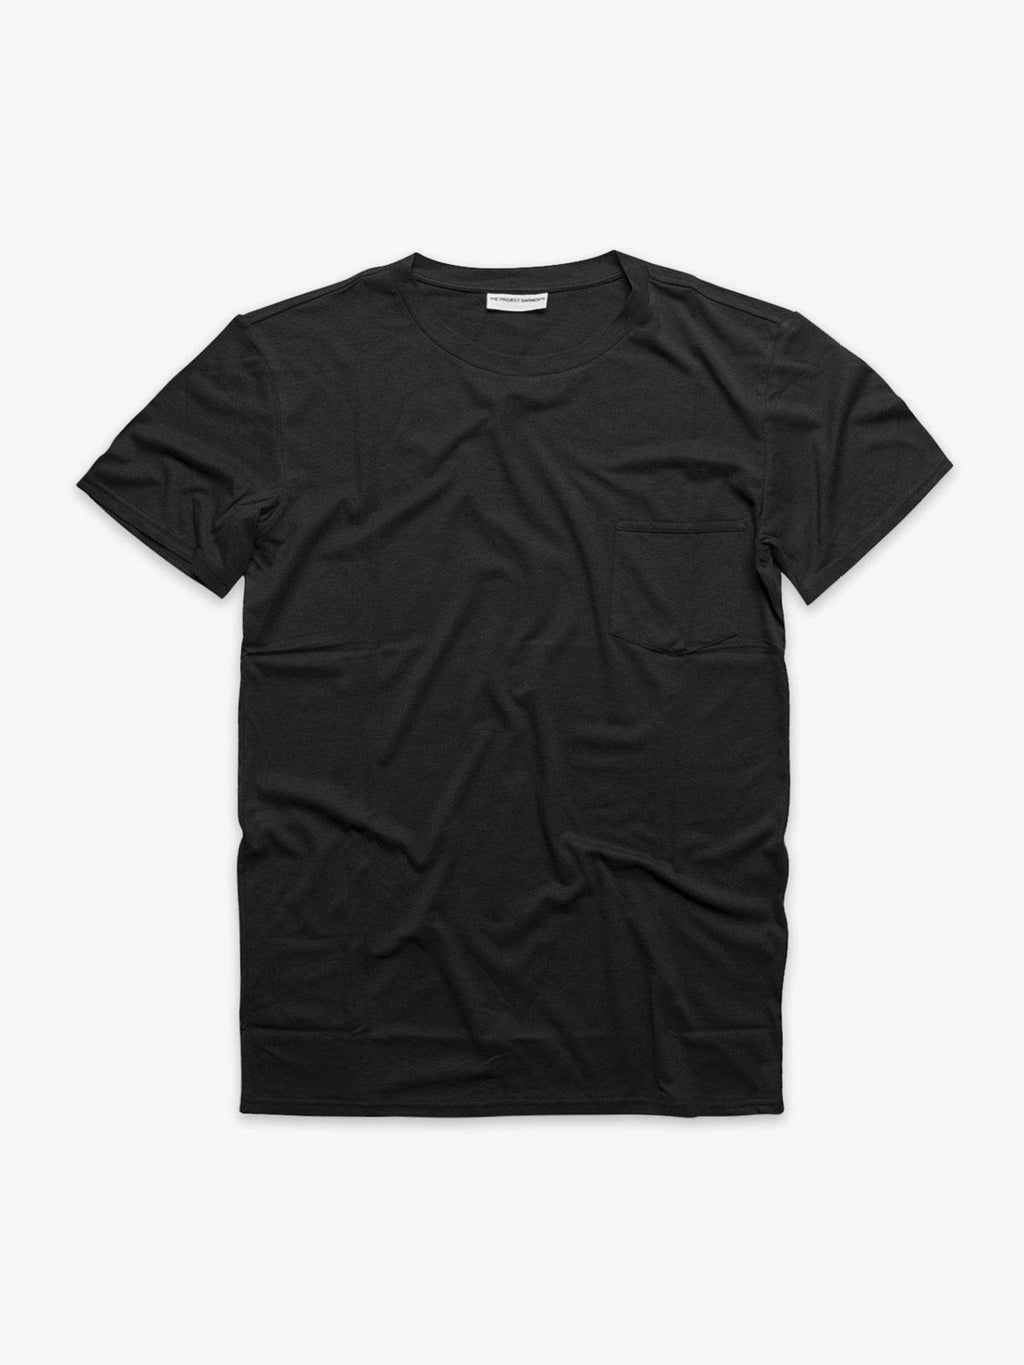 The Project Garments Crew Neck Modal-Blend Pocket T-shirt Charcoal Grey